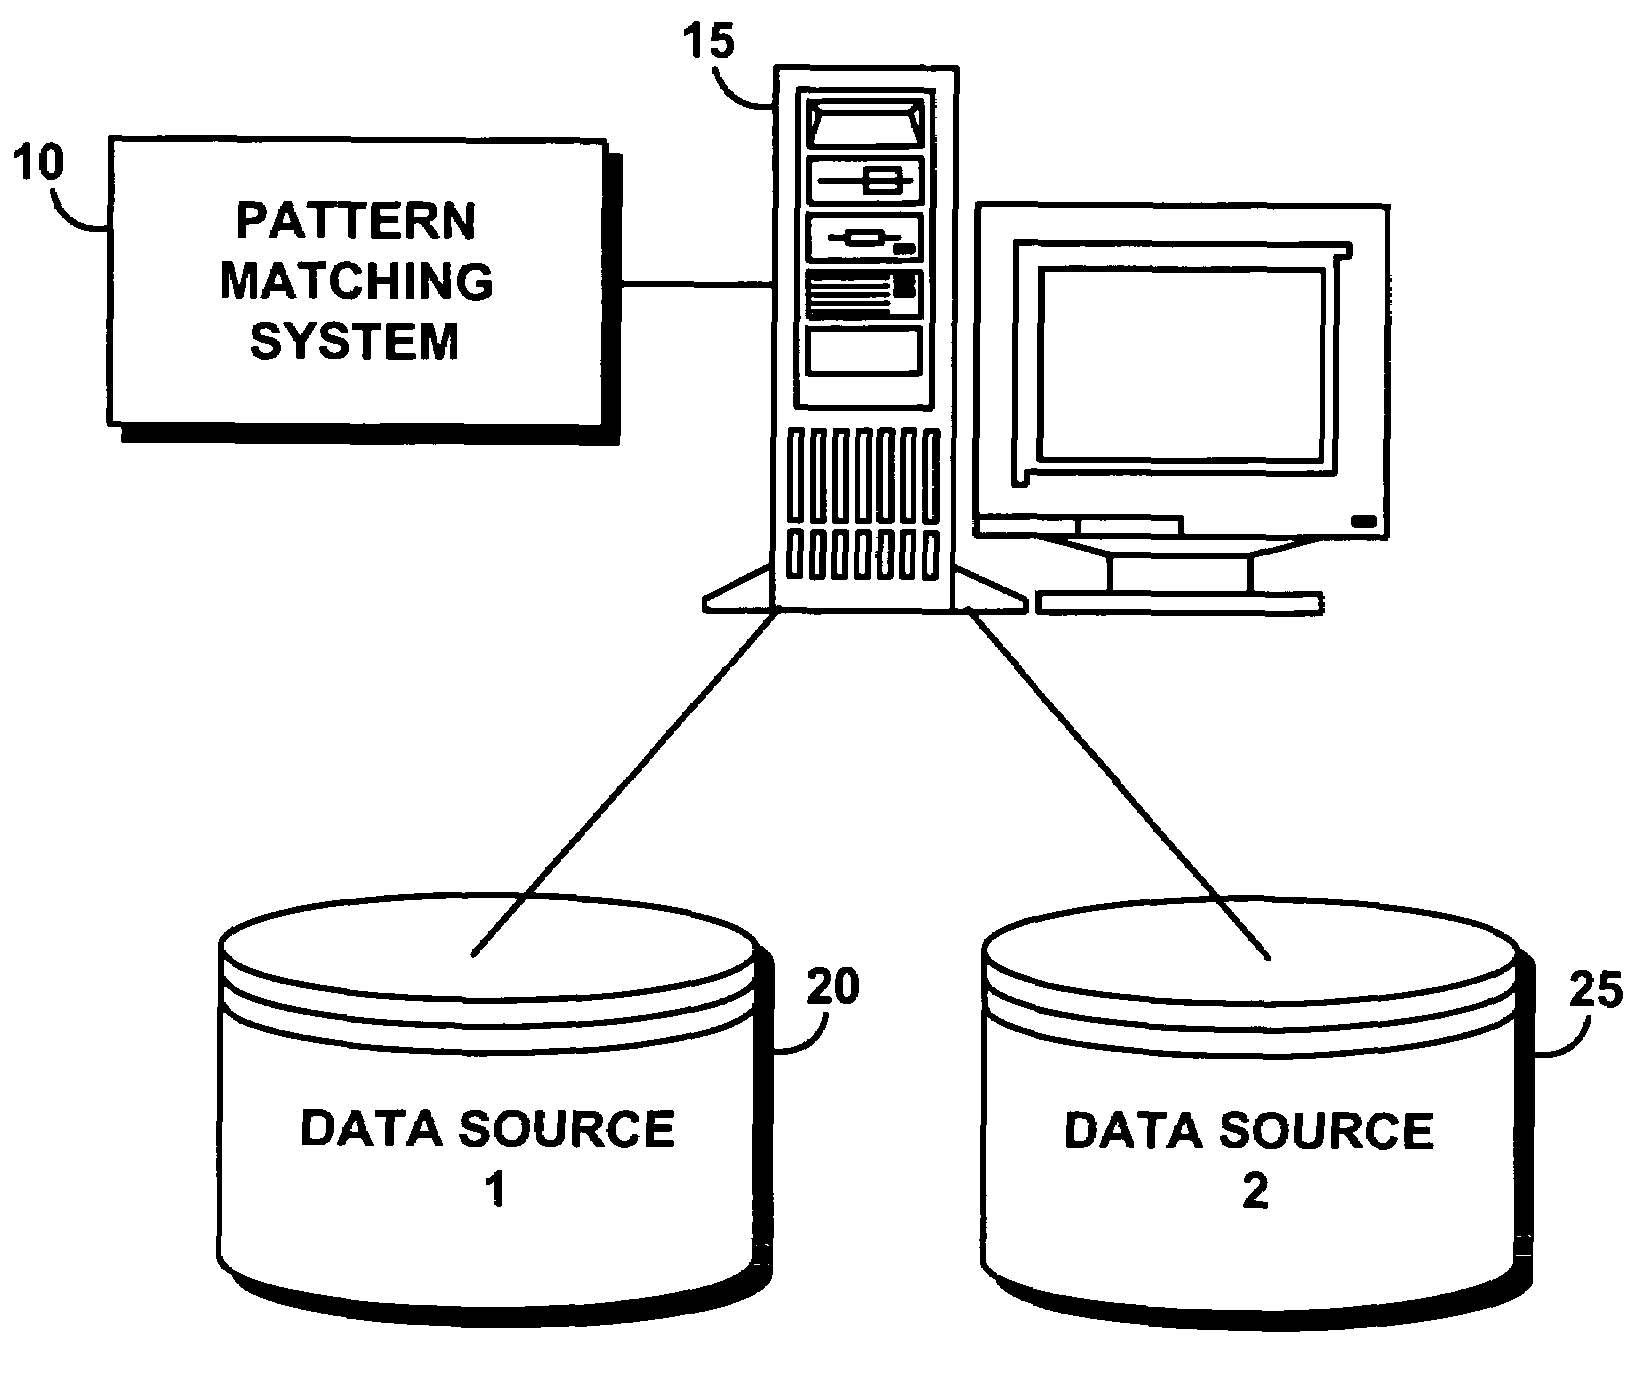 Method for matching pattern-based data